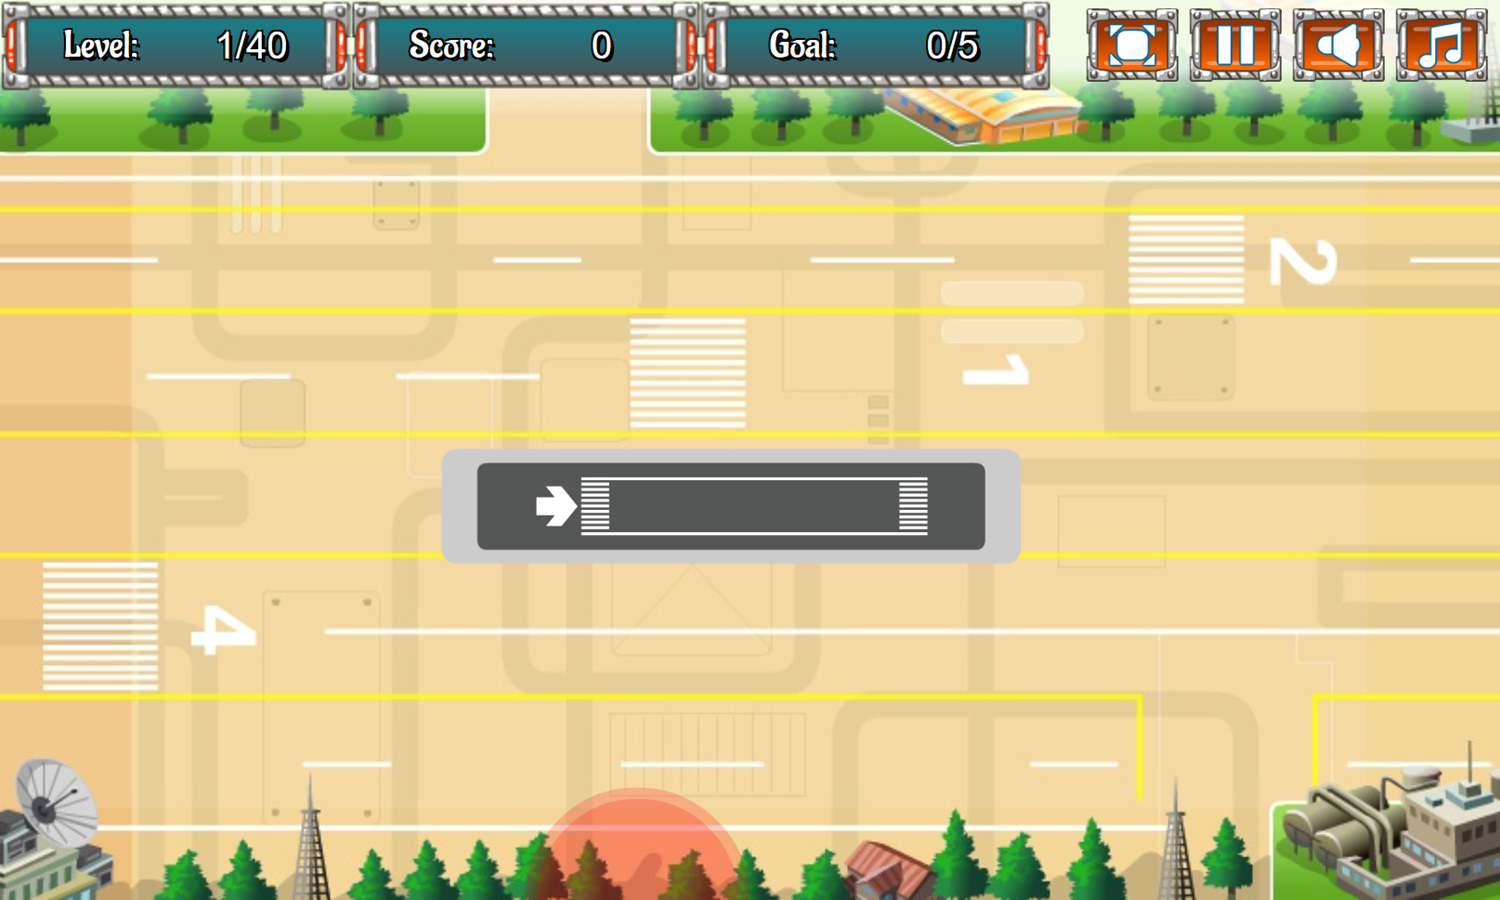 Airport Management 2 Game Level Start Screenshot.